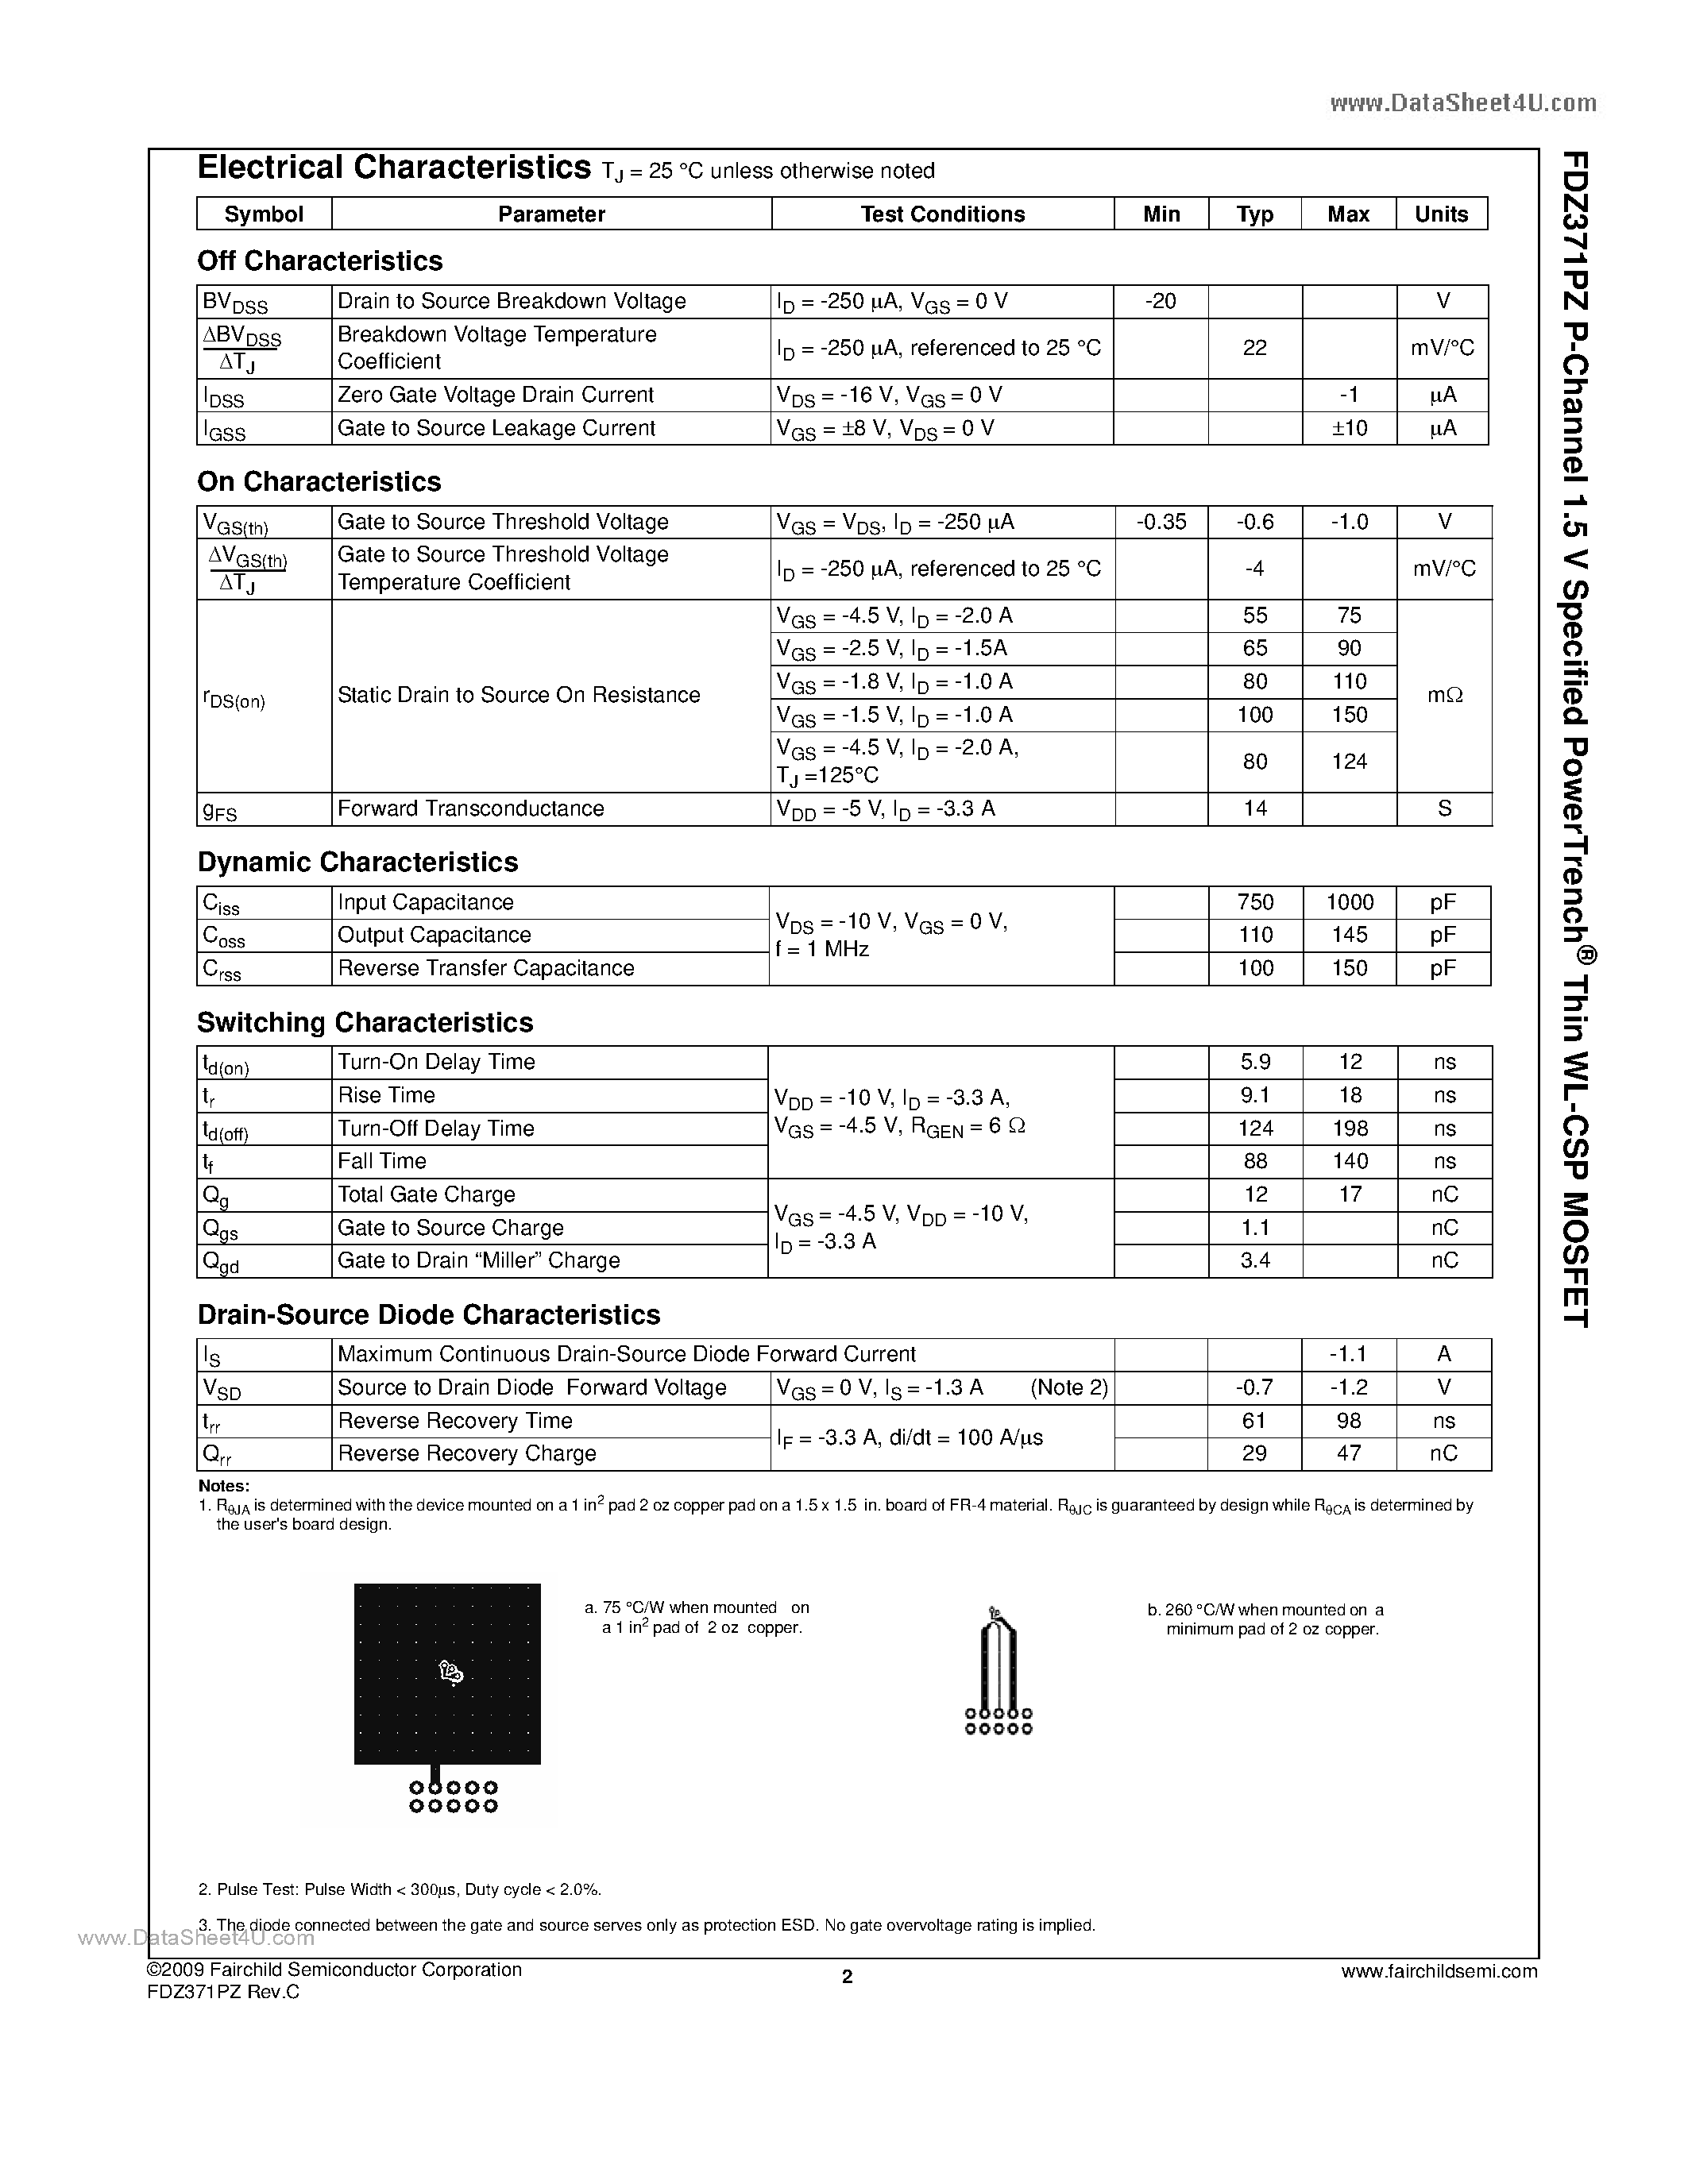 Даташит FDZ371PZ - Thin WL-CSP MOSFET страница 2